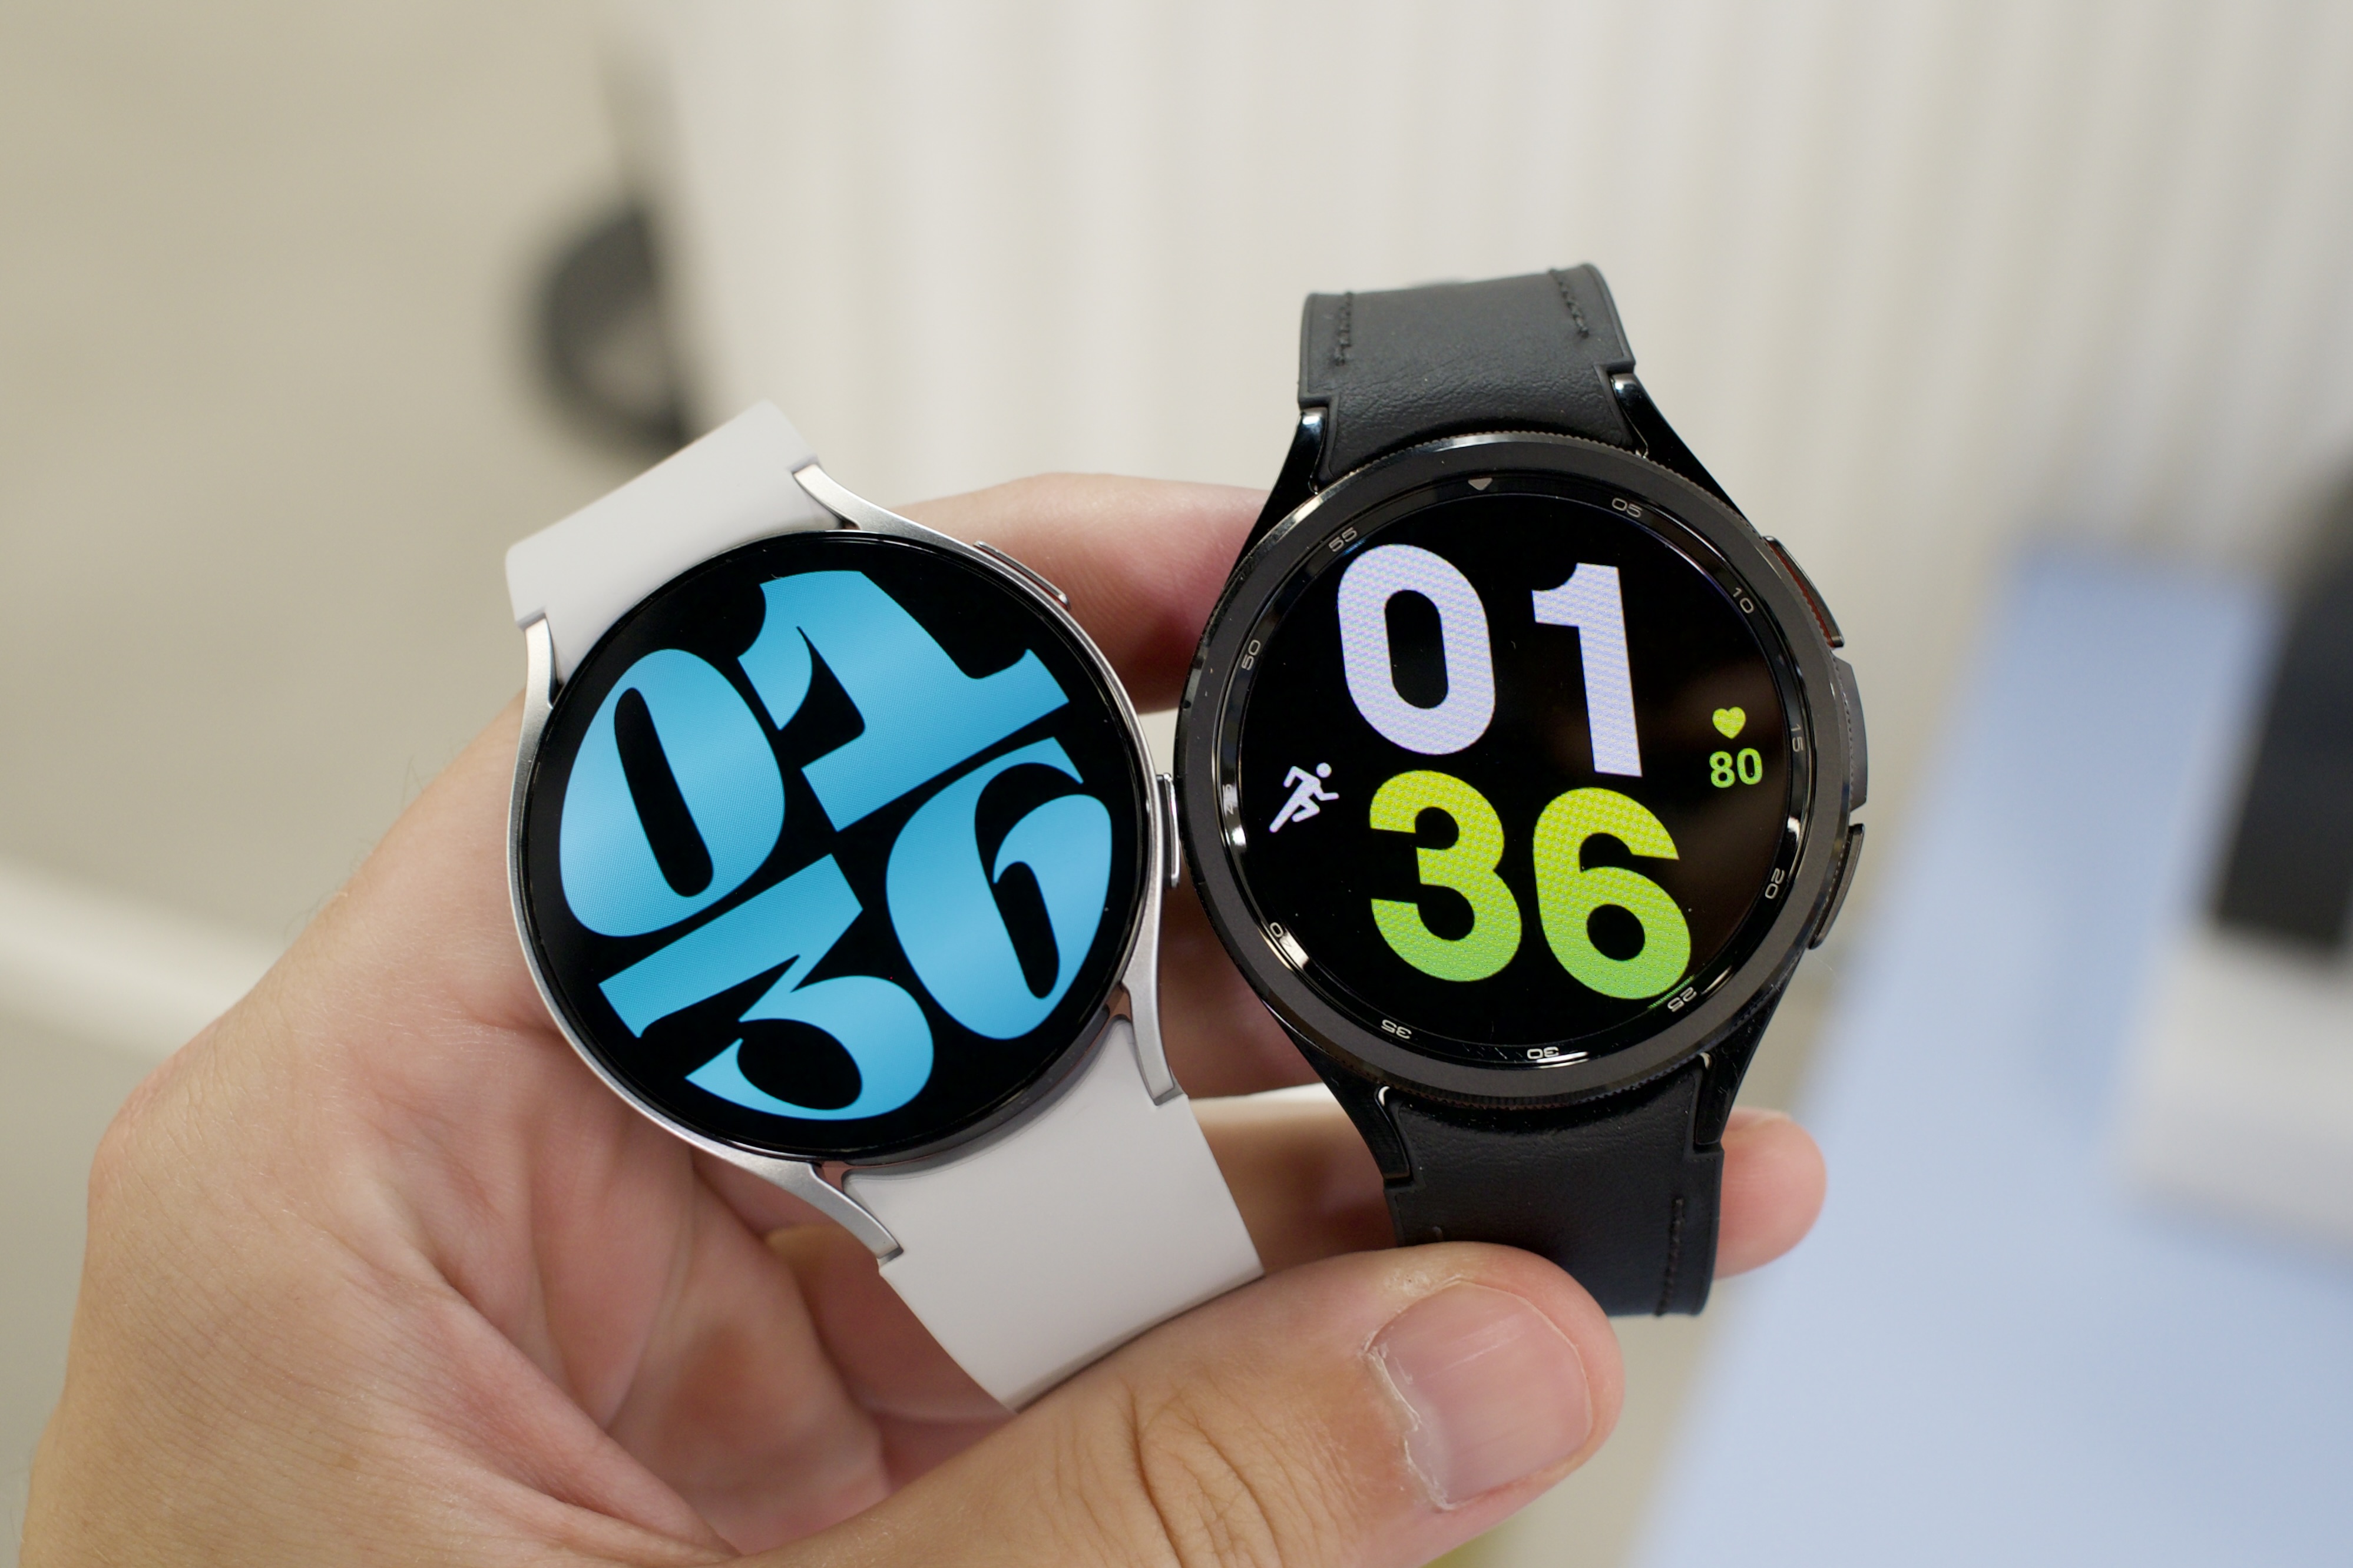 Samsung's Galaxy Watch6 : Unlocking a heart healthier lifestyle on your  wrist – Samsung Newsroom Philippines